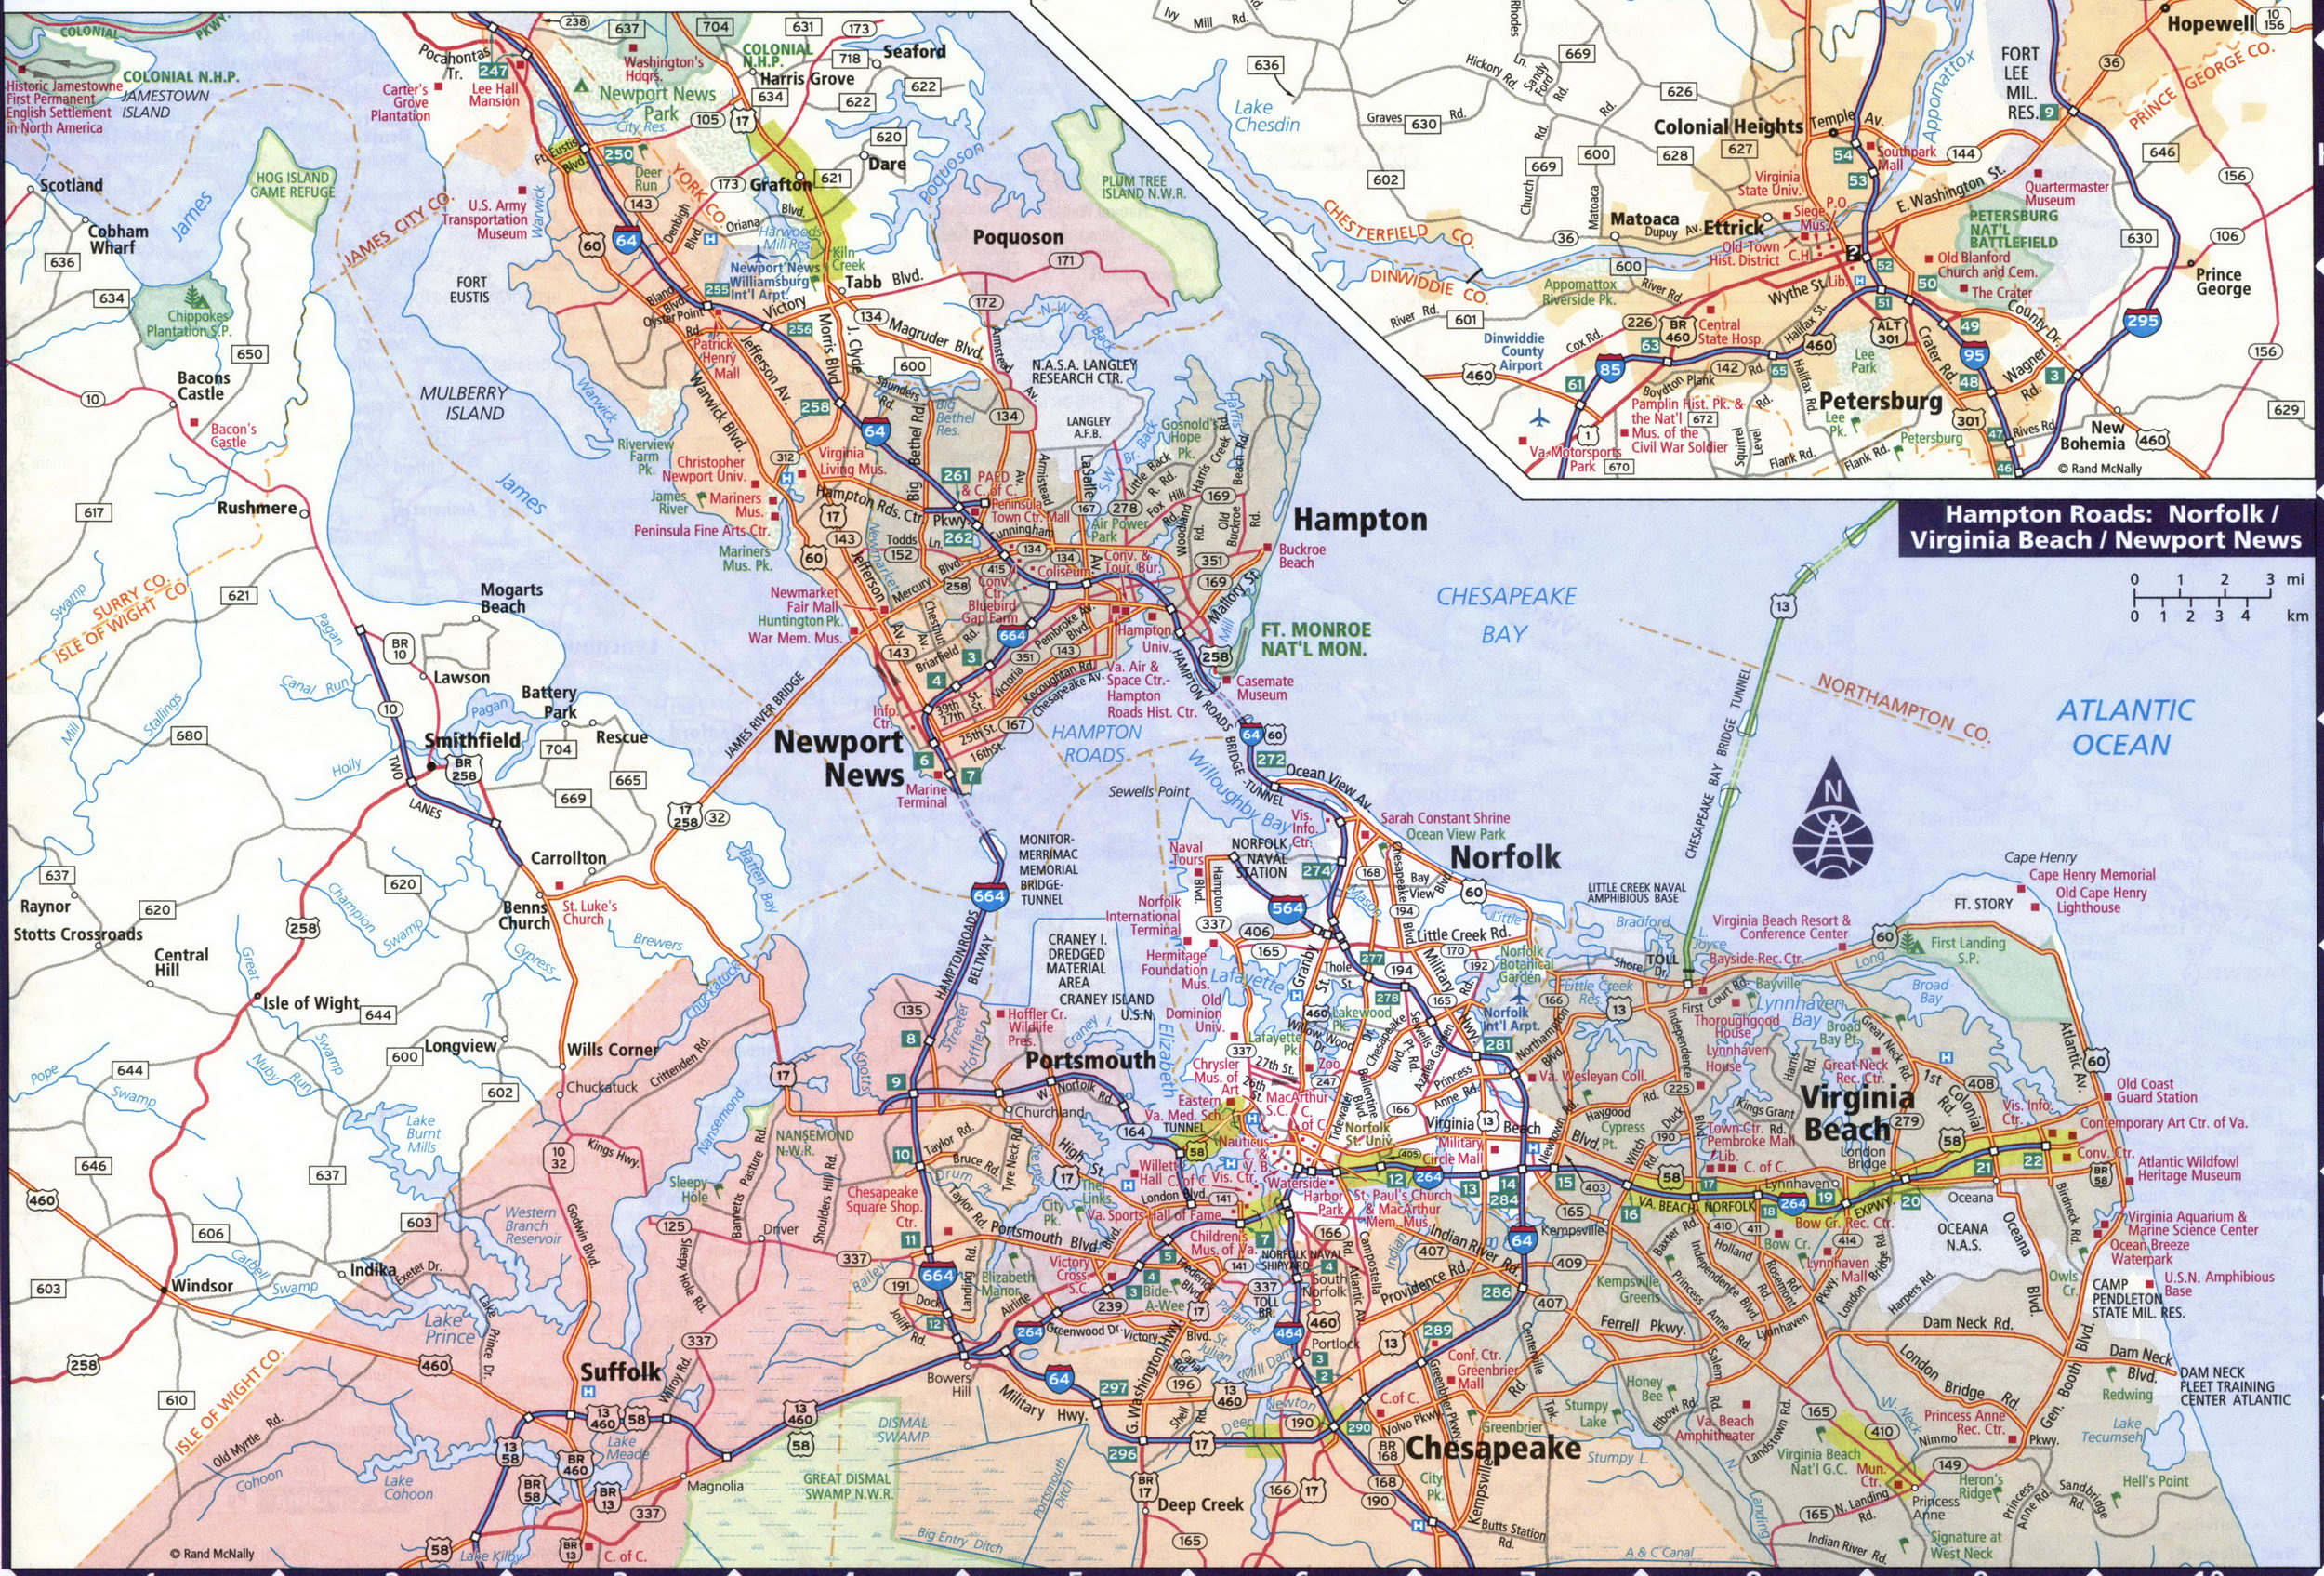 Map of Hampton and Norfolk